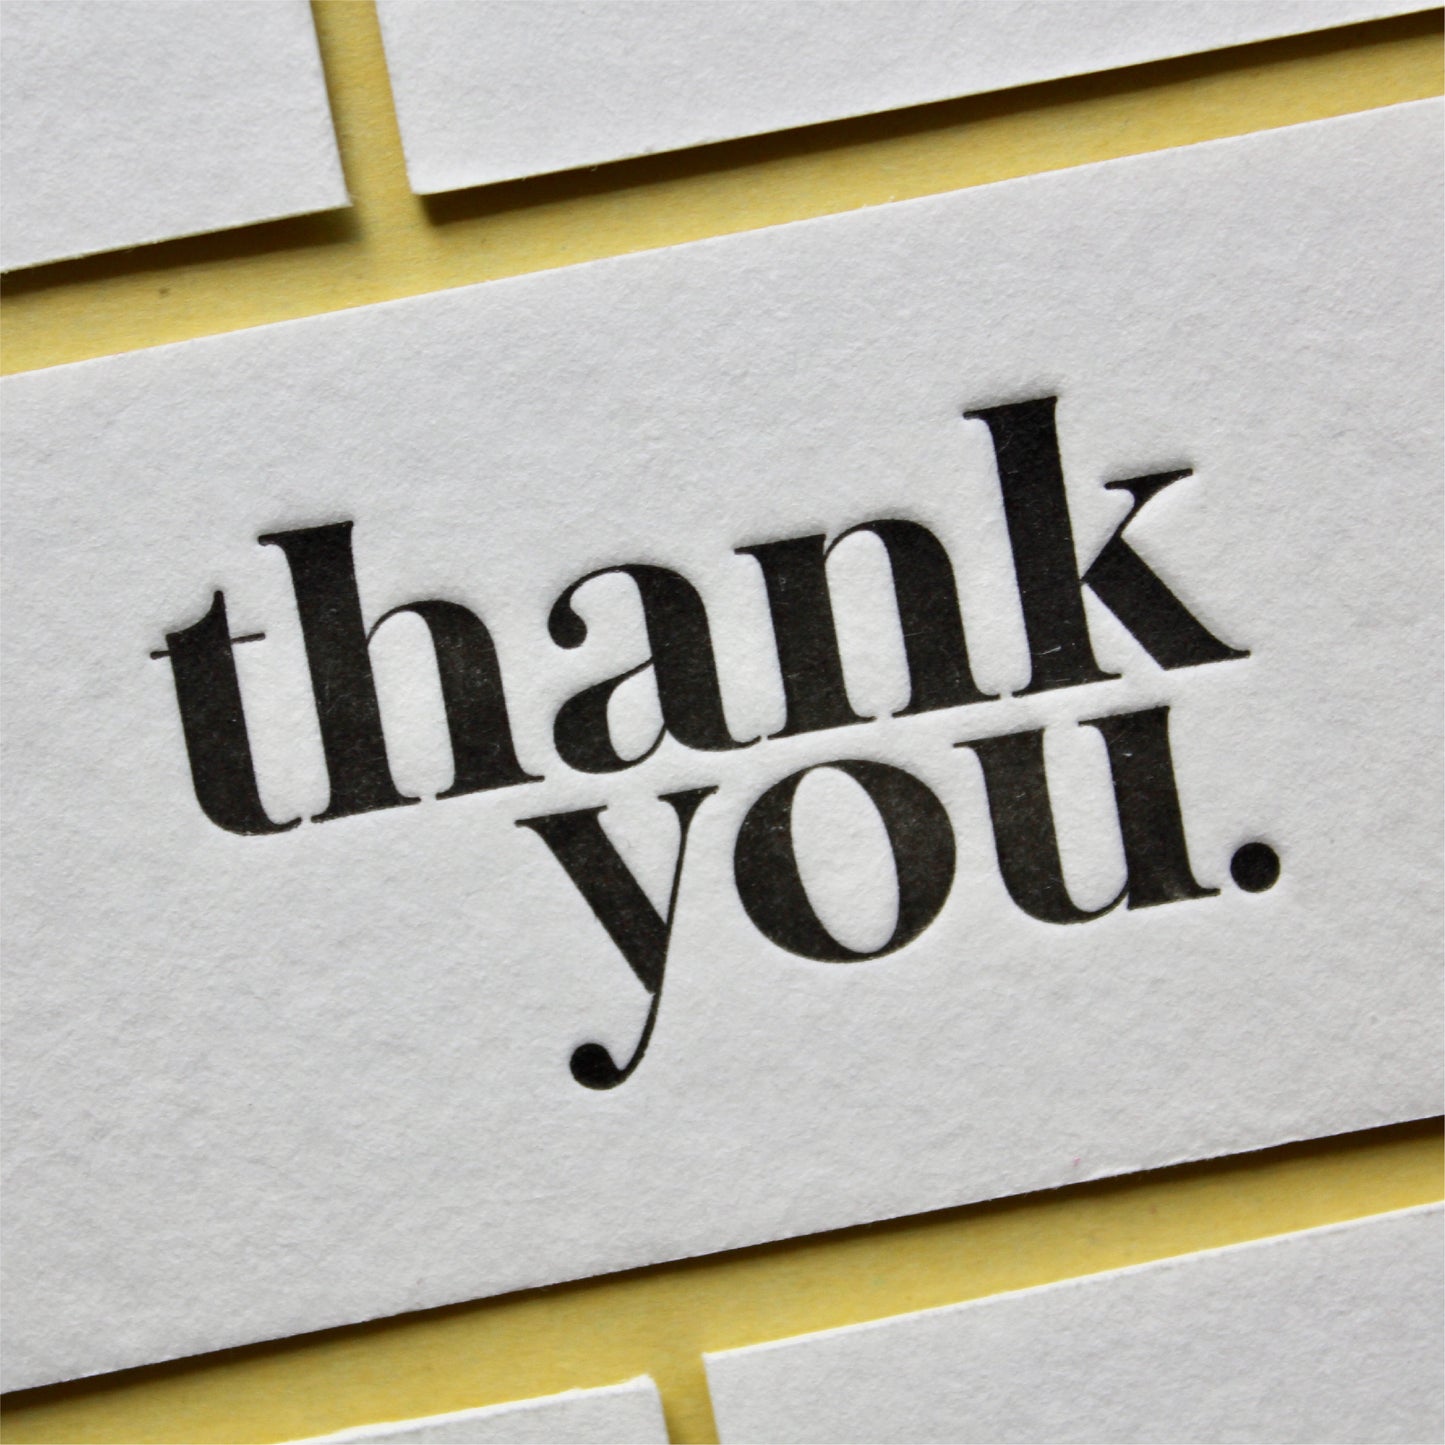 Letterpress "Thank you" swing tags